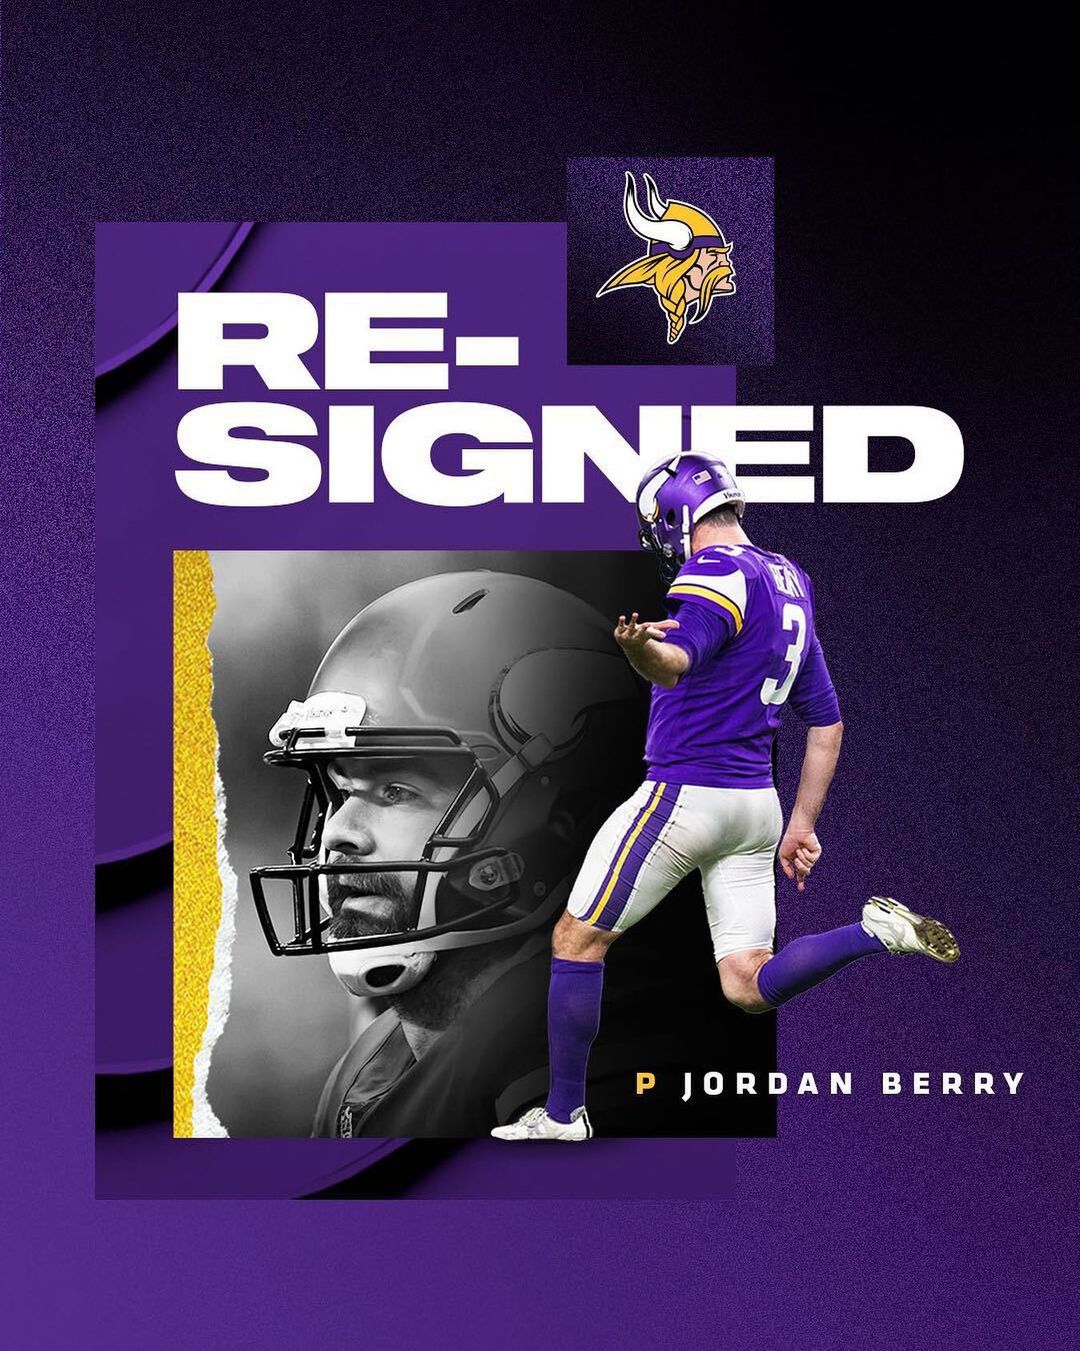 The #Vikings have re-signed P Jordan Berry....